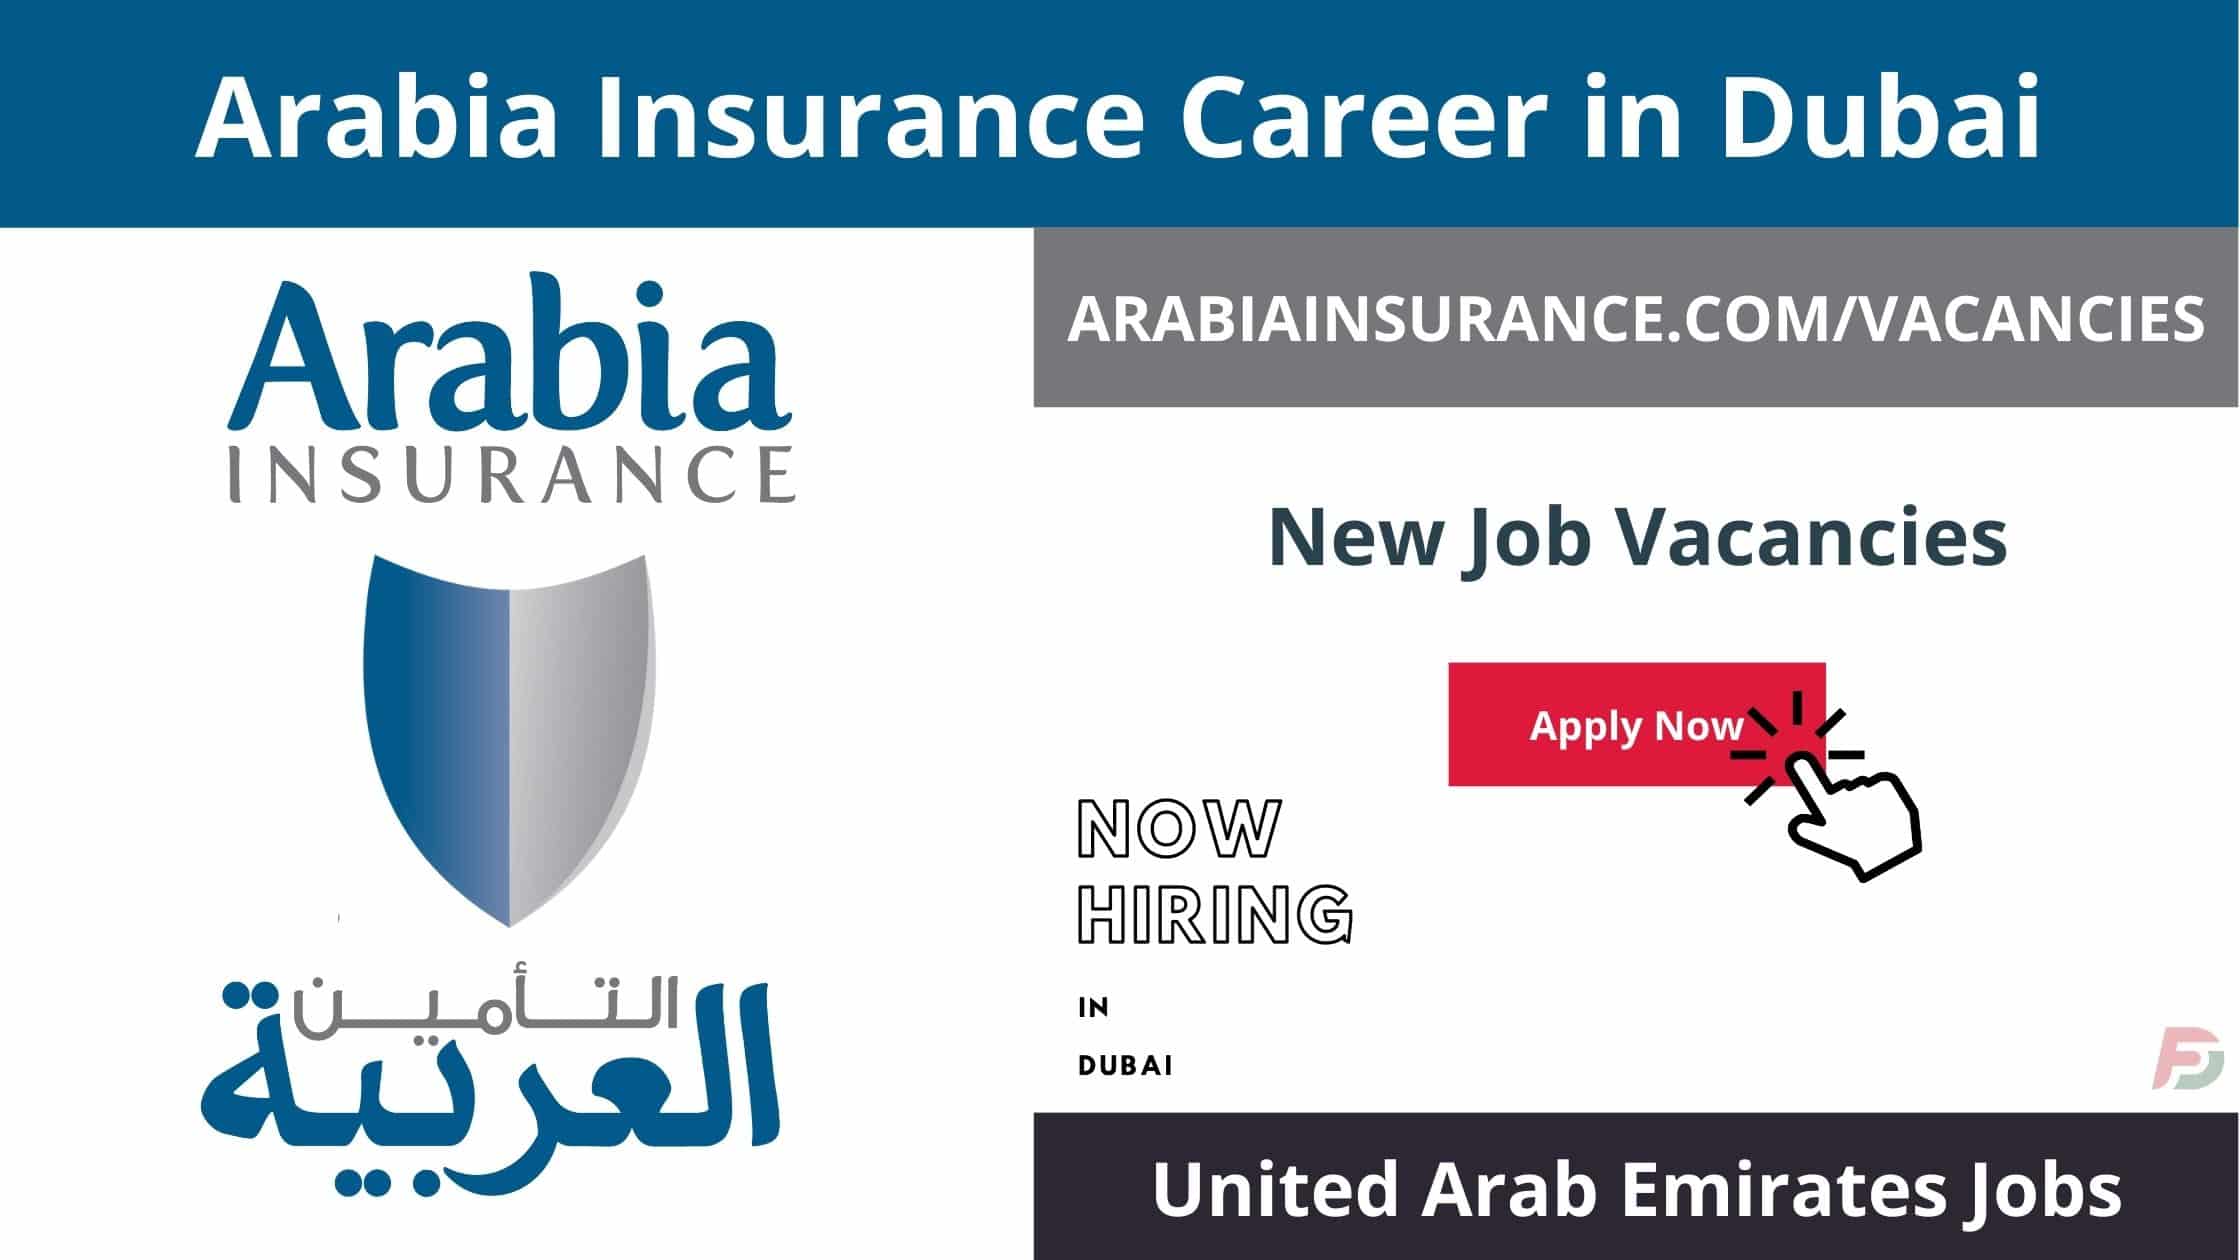 Arabia Insurance Careers in Dubai